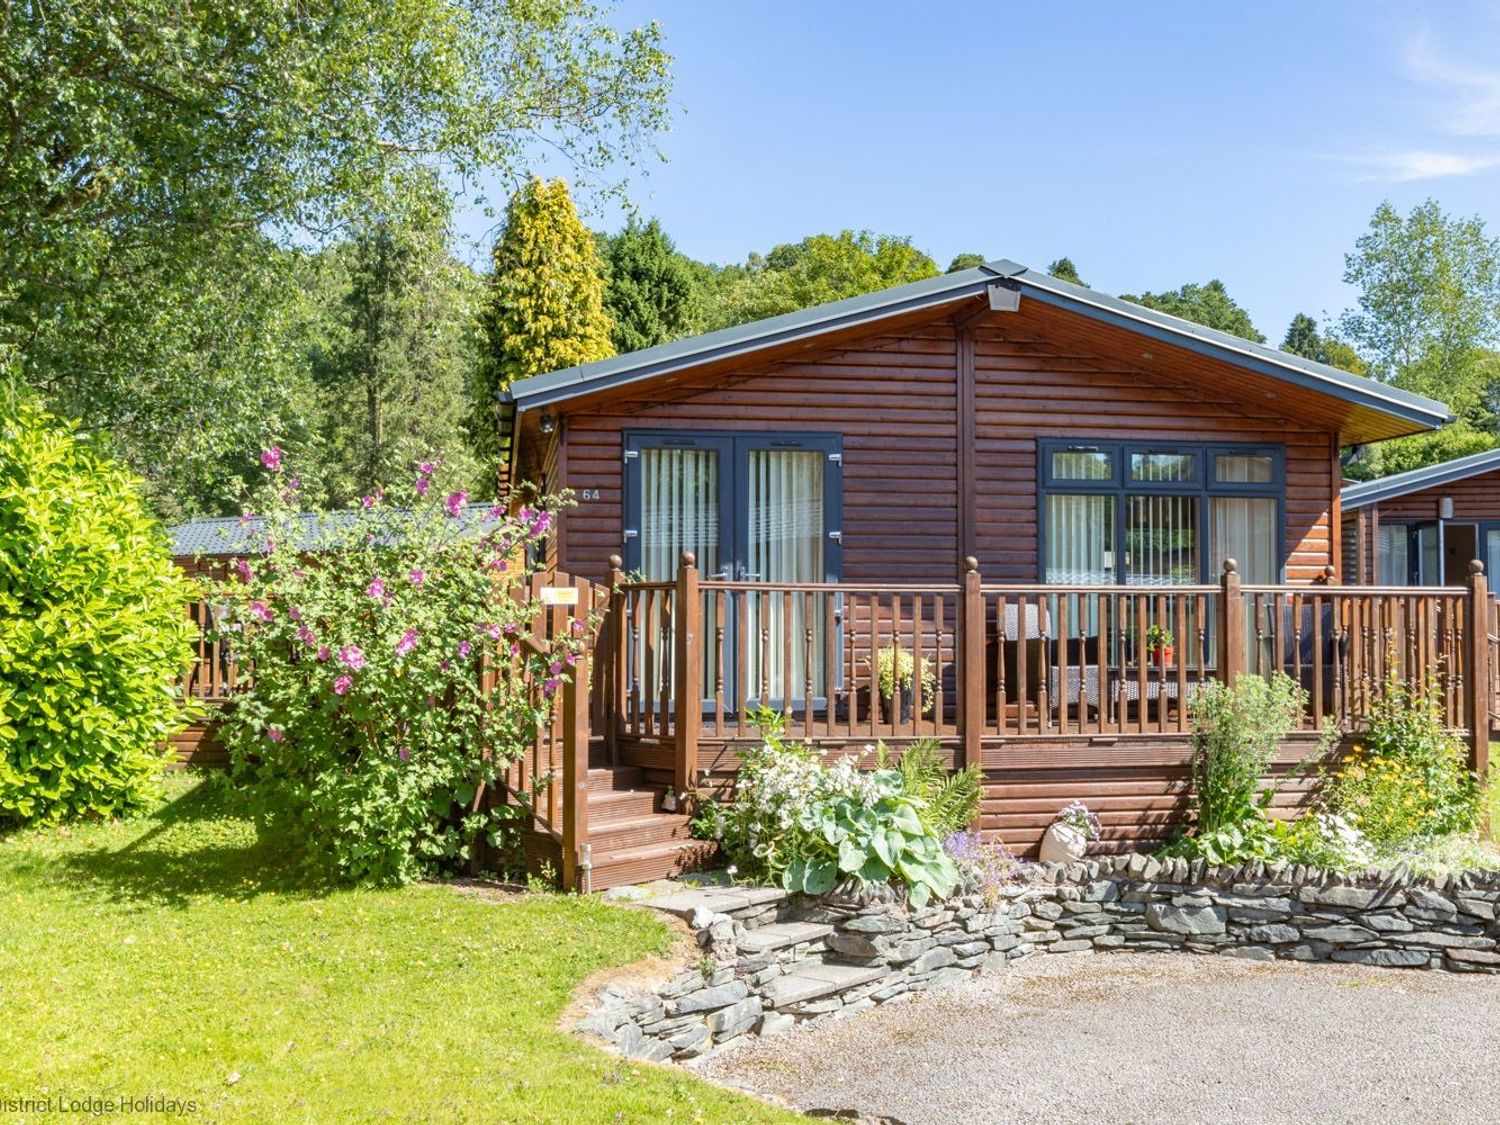 Bosun's Lodge, Troutbeck Bridge, Cumbria, family-friendly, on-site facilities, National Park, 2-beds